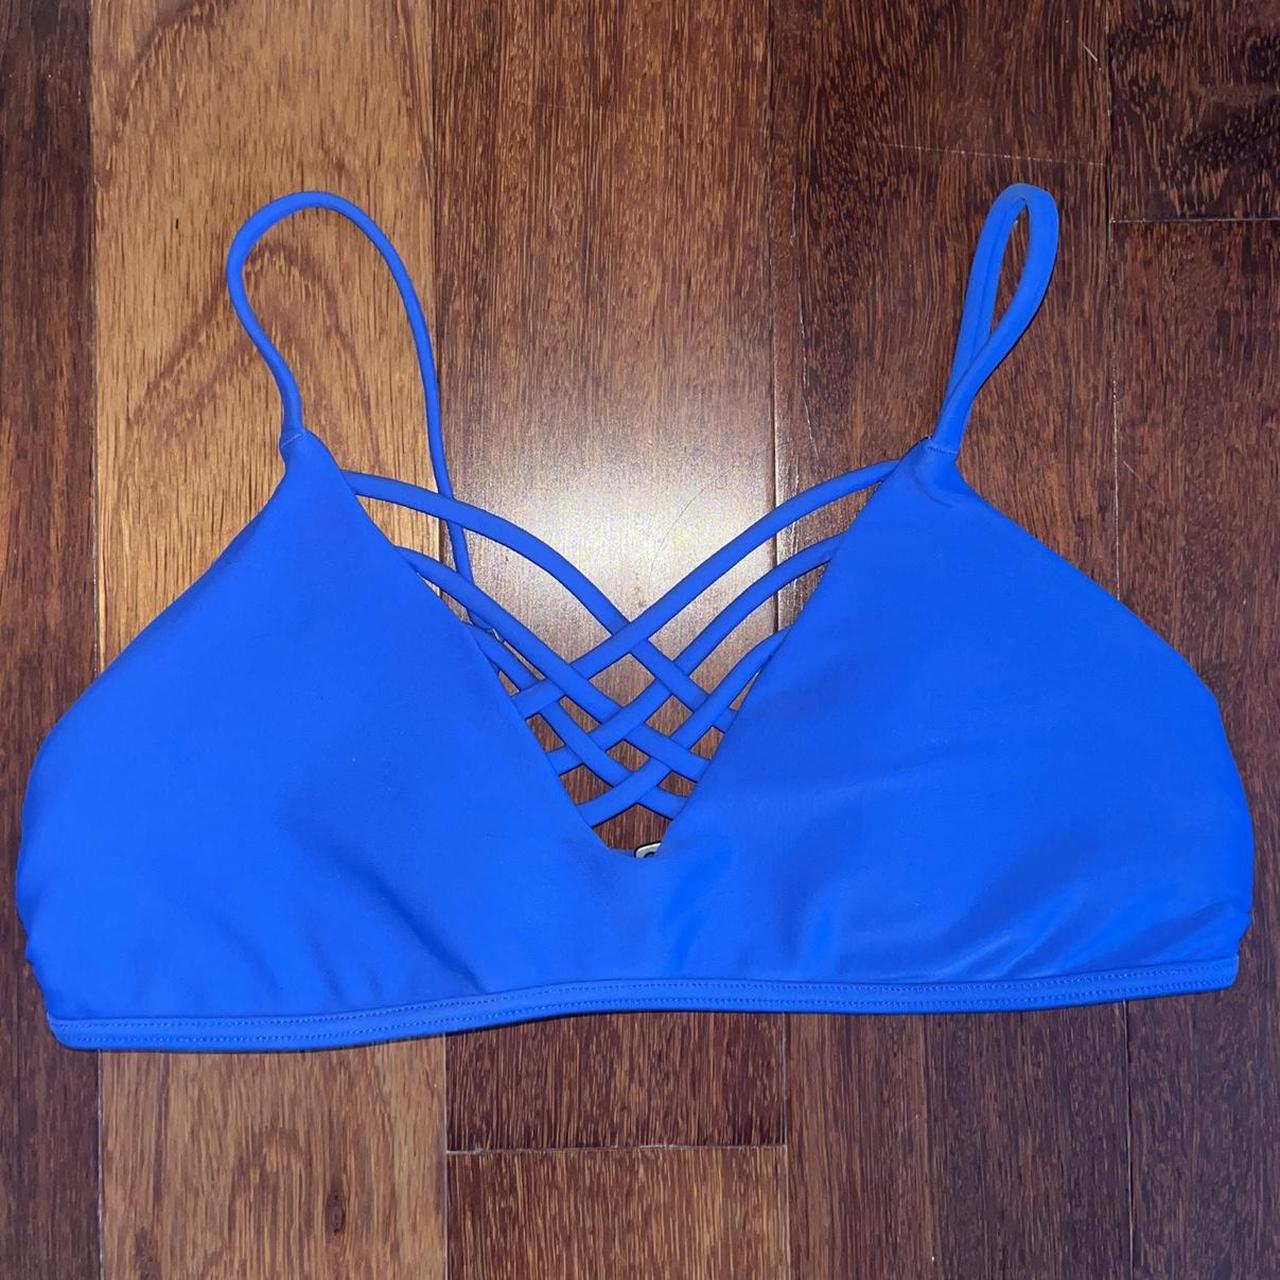 Blue Hollister bikini top. Small snag on the left side - Depop